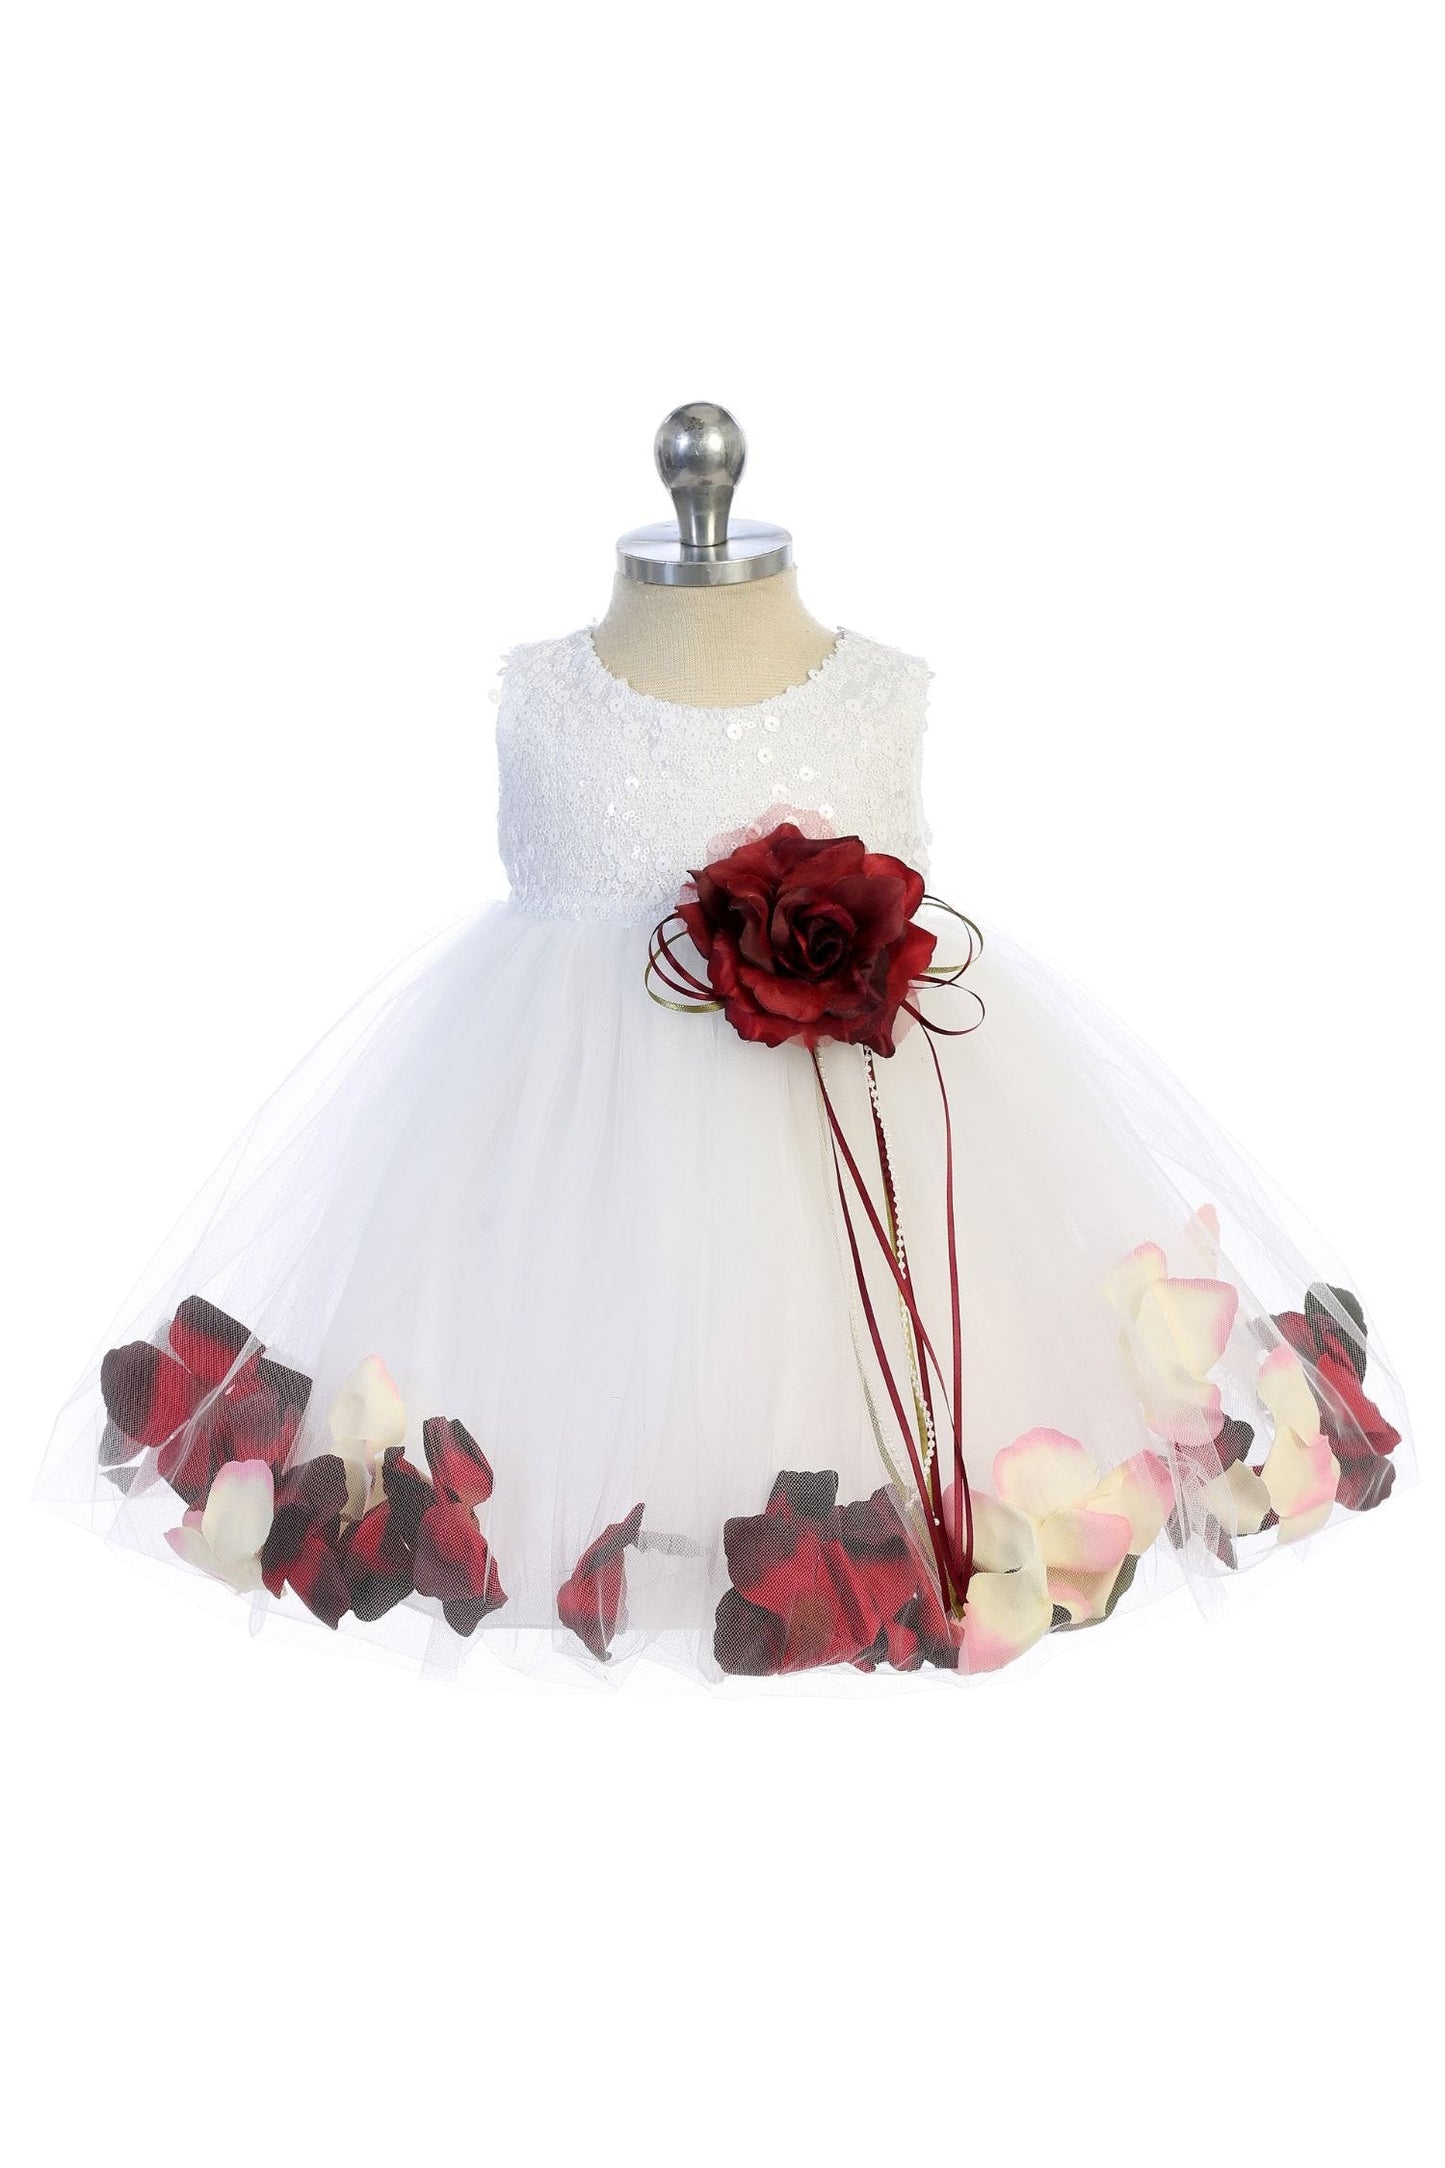 Dress - Sequin Top Petal Dress